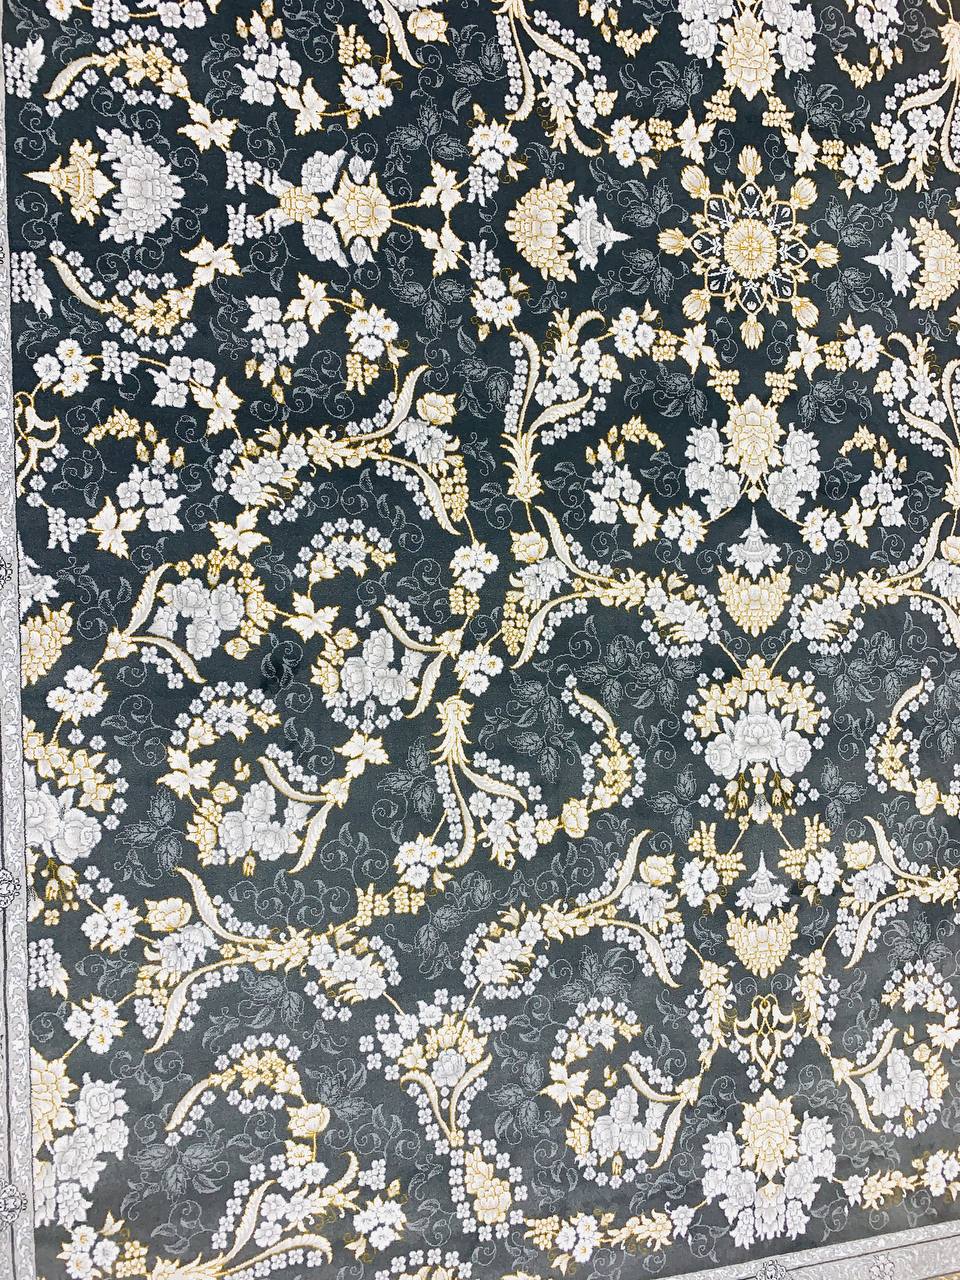 Smoked Zarnagar carpet, 700 comb density, 2550, simple, ten colors